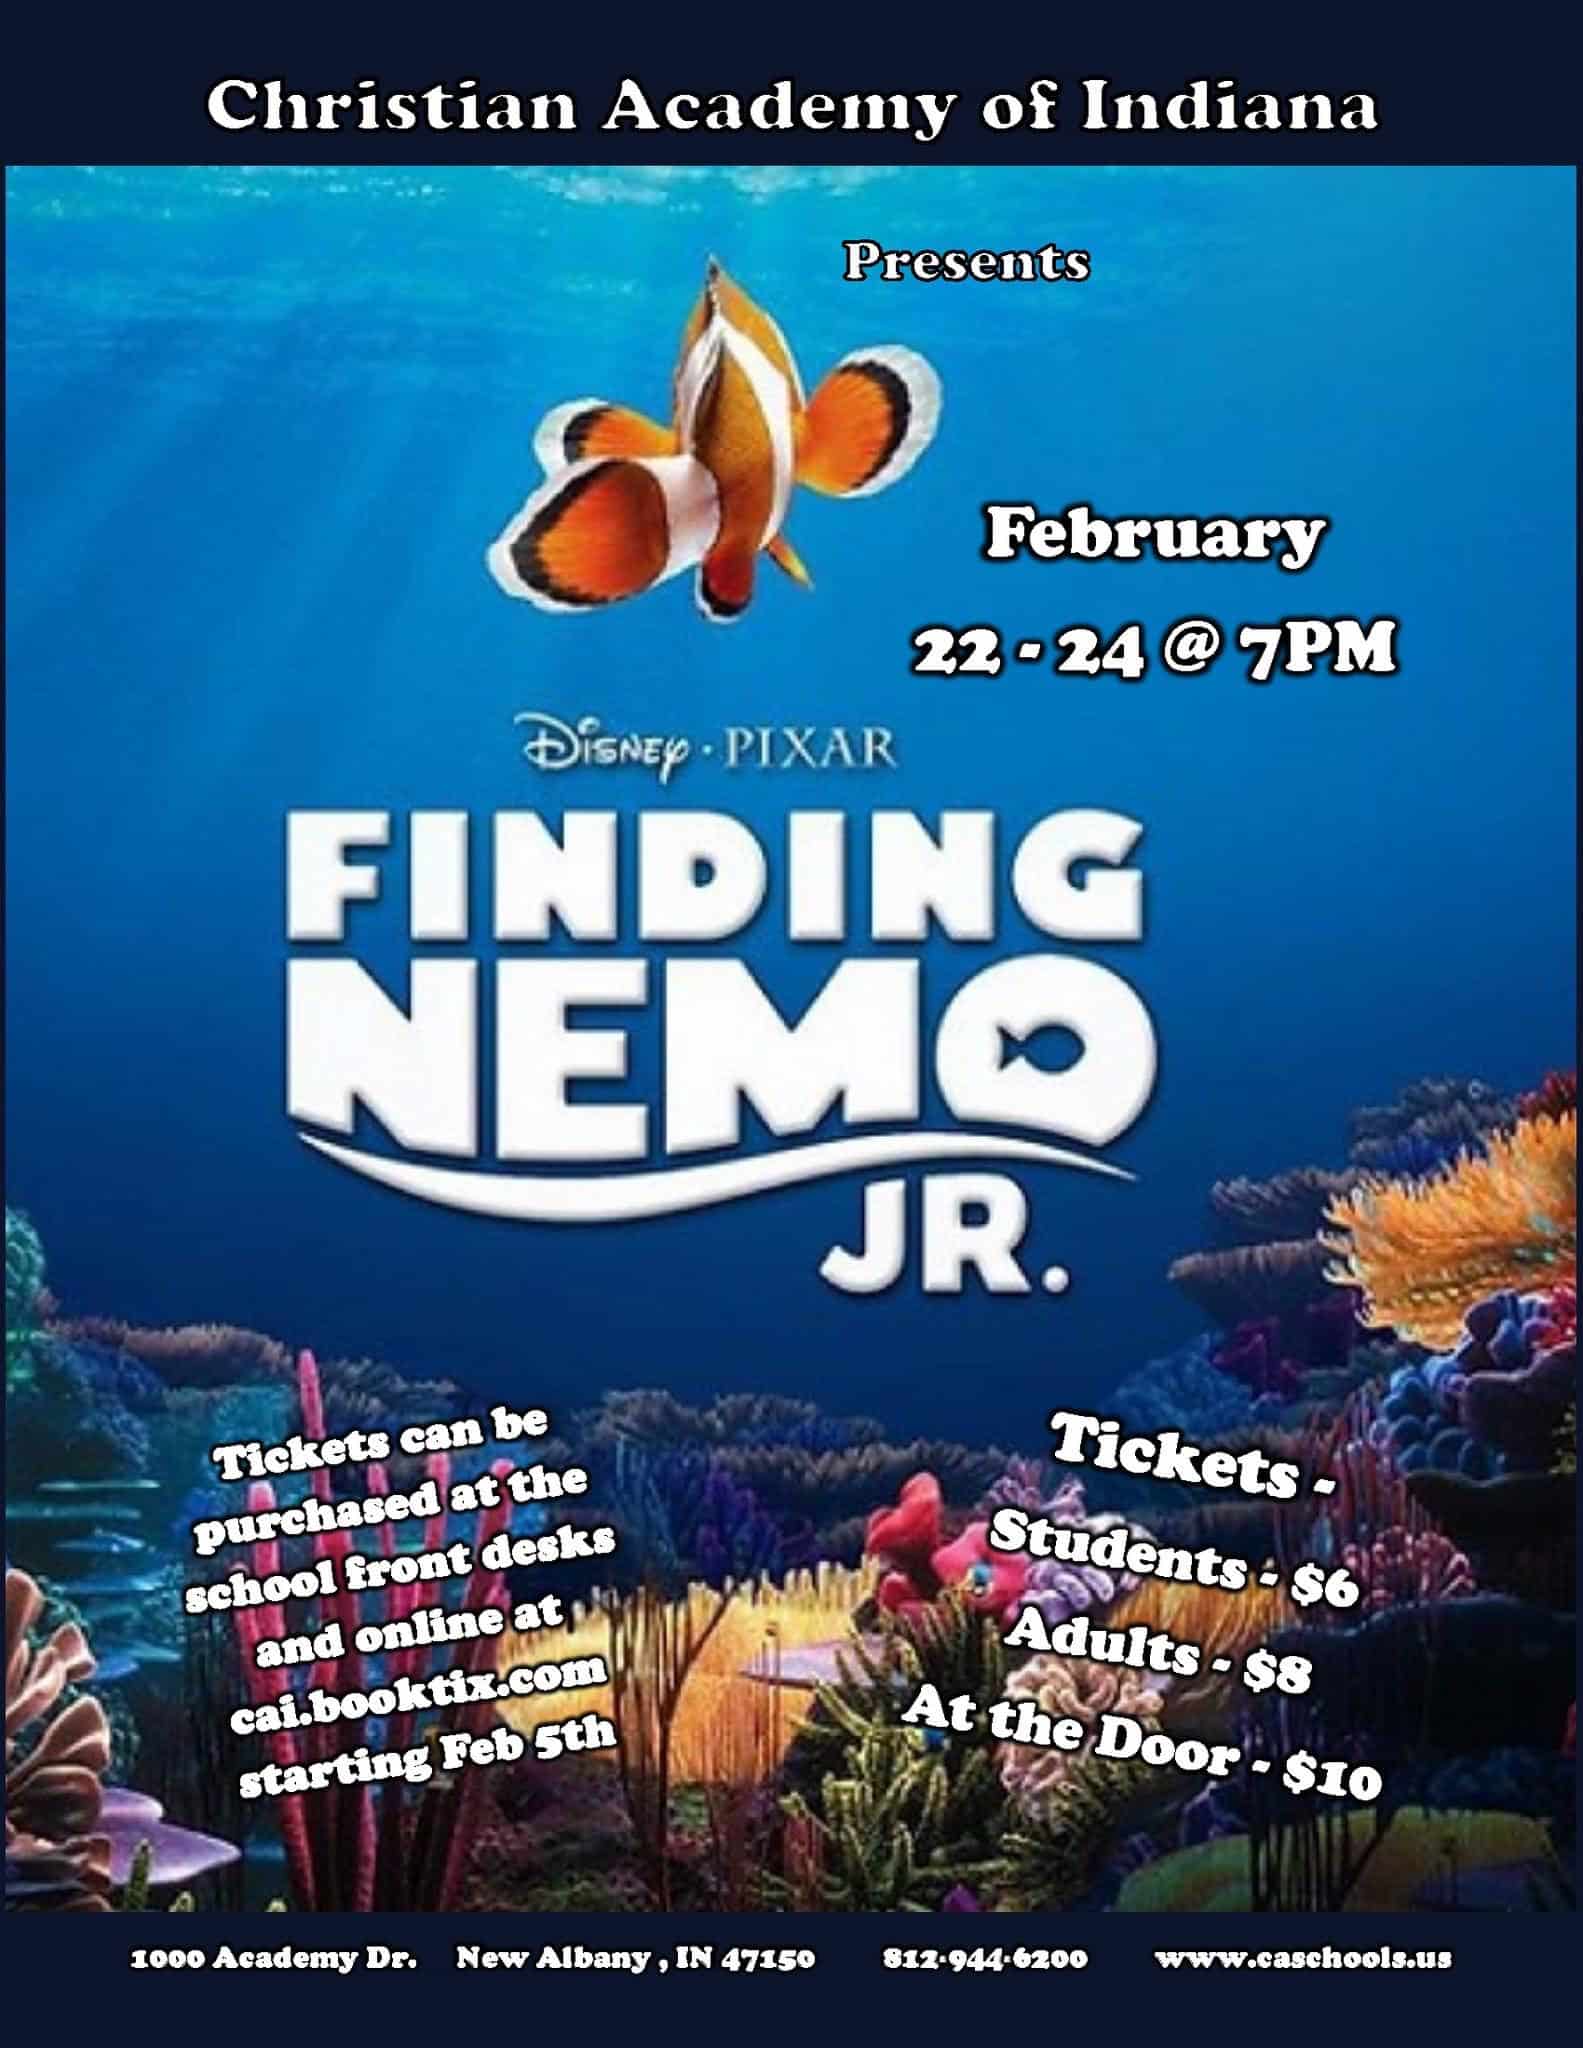 Christian Academy School System | Christian Academy of Indiana | Drama | Finding Nemo Jr. | February 22-24